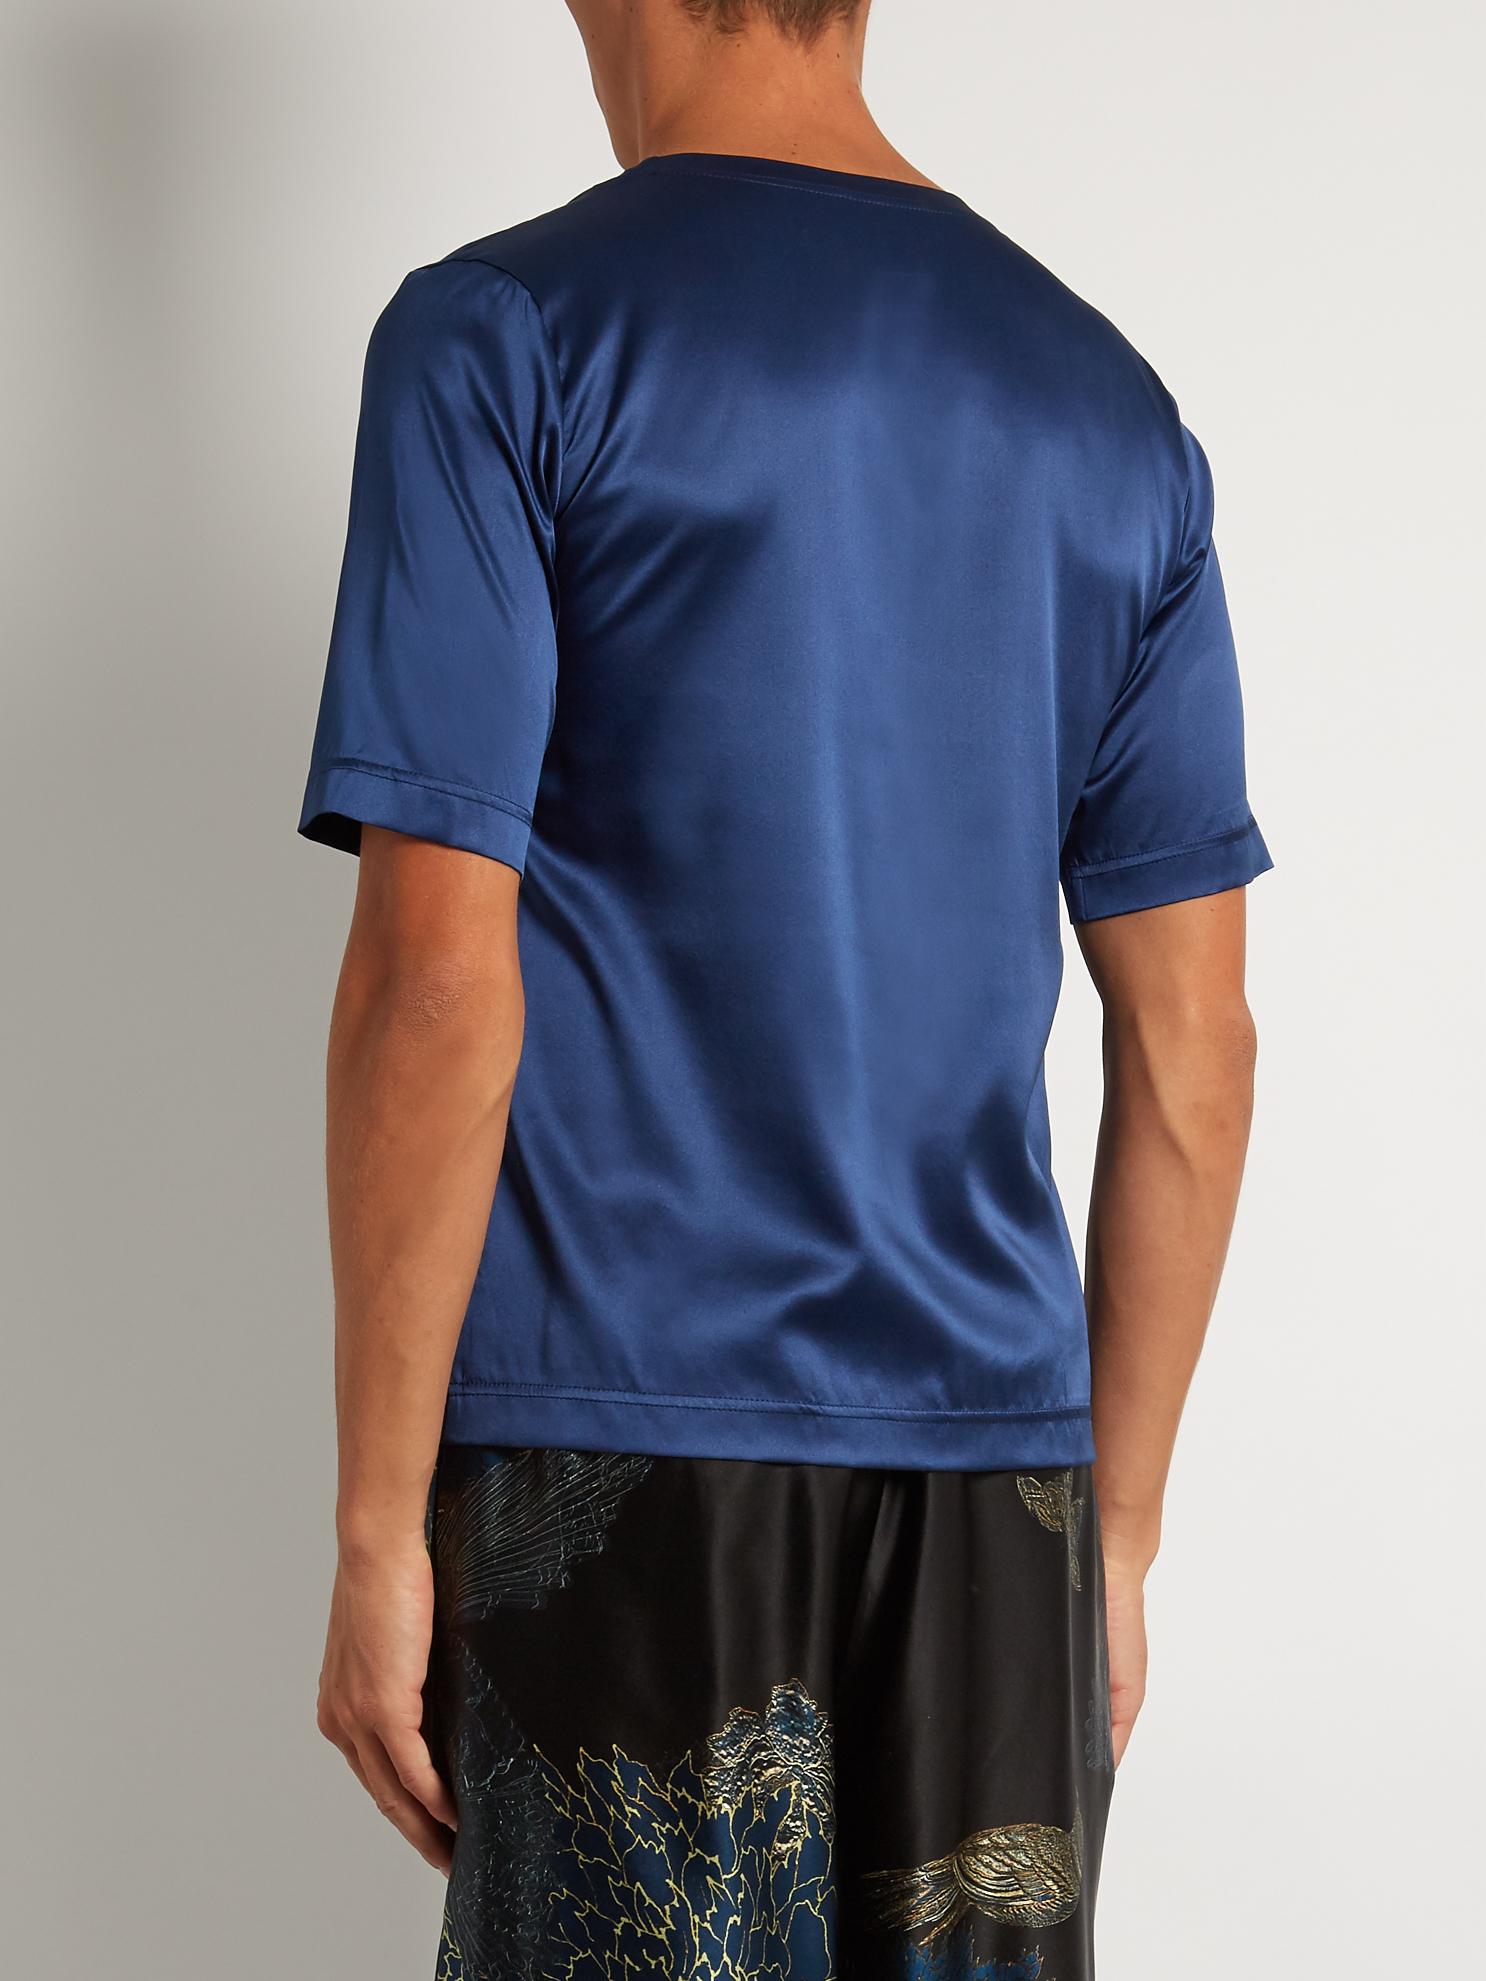 Lyst - Meng Stretch Silk-satin T-shirt in Blue for Men